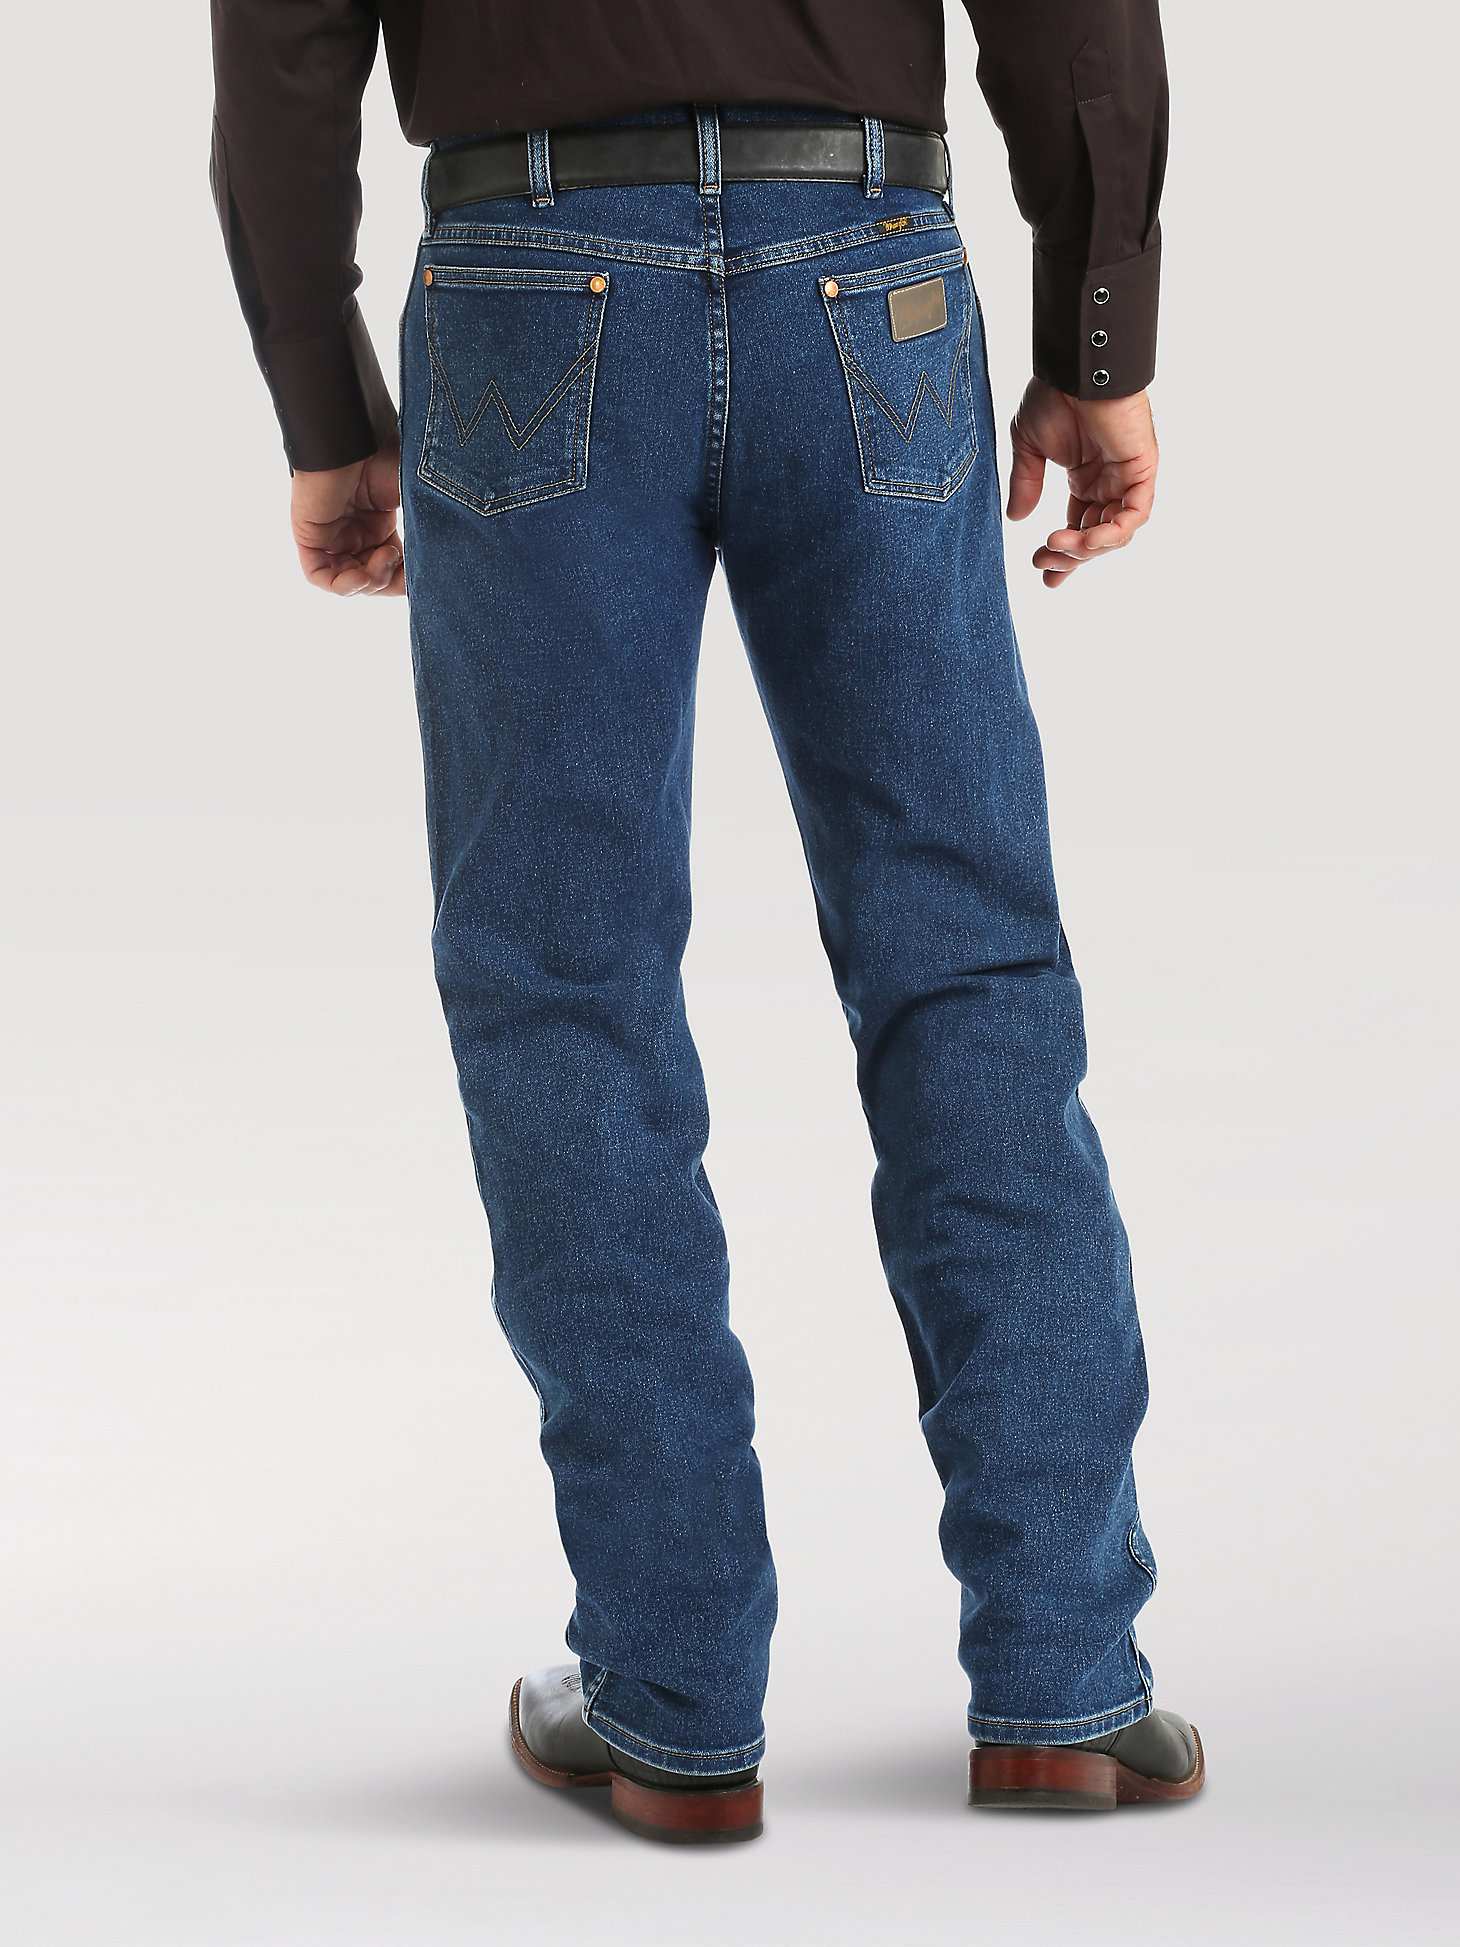 Wrangler® Cowboy Cut® Original Fit Active Flex Jeans